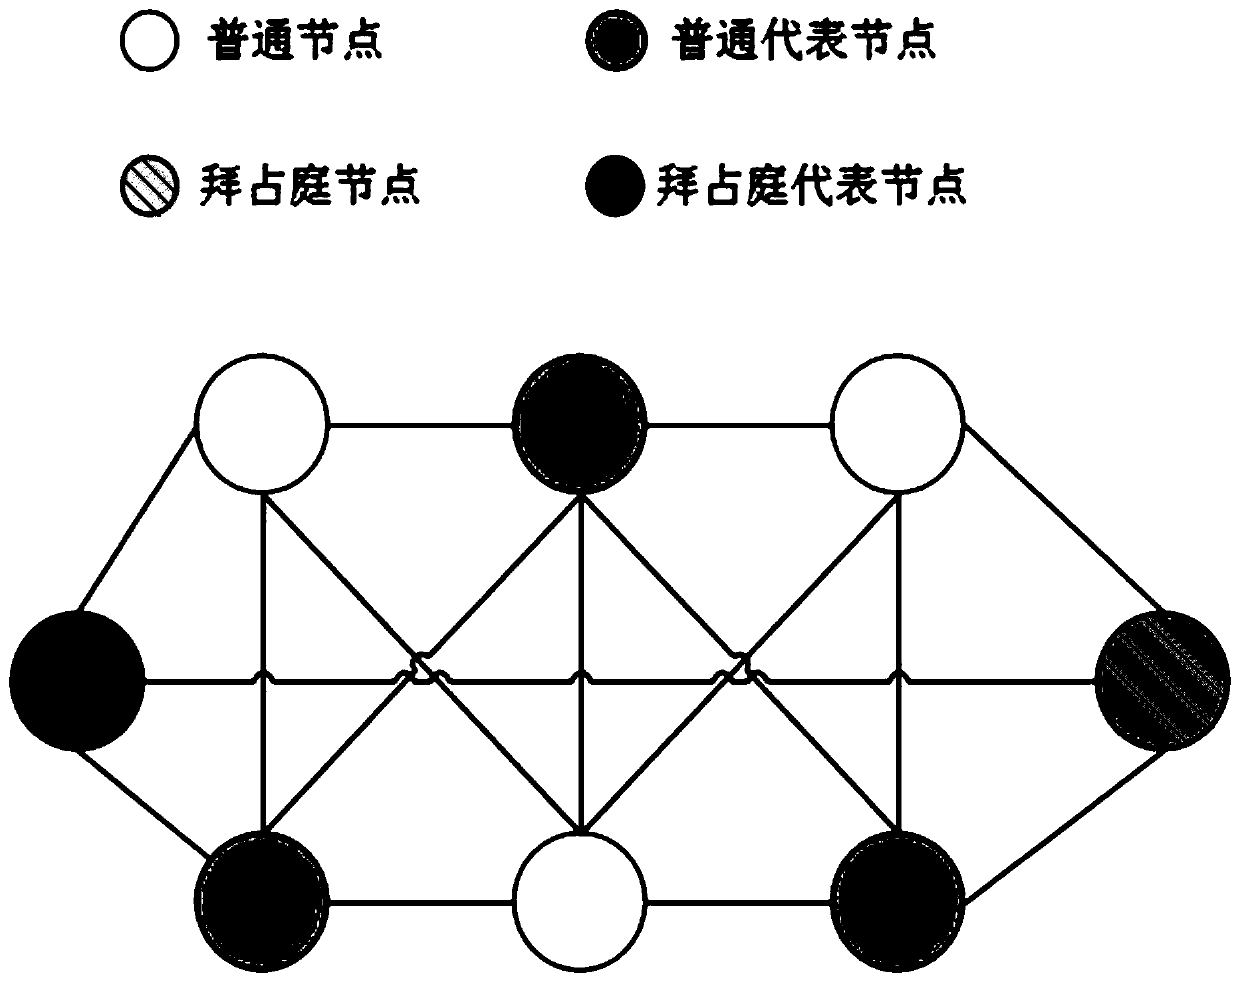 Blockchain consensus method based on trust relationship